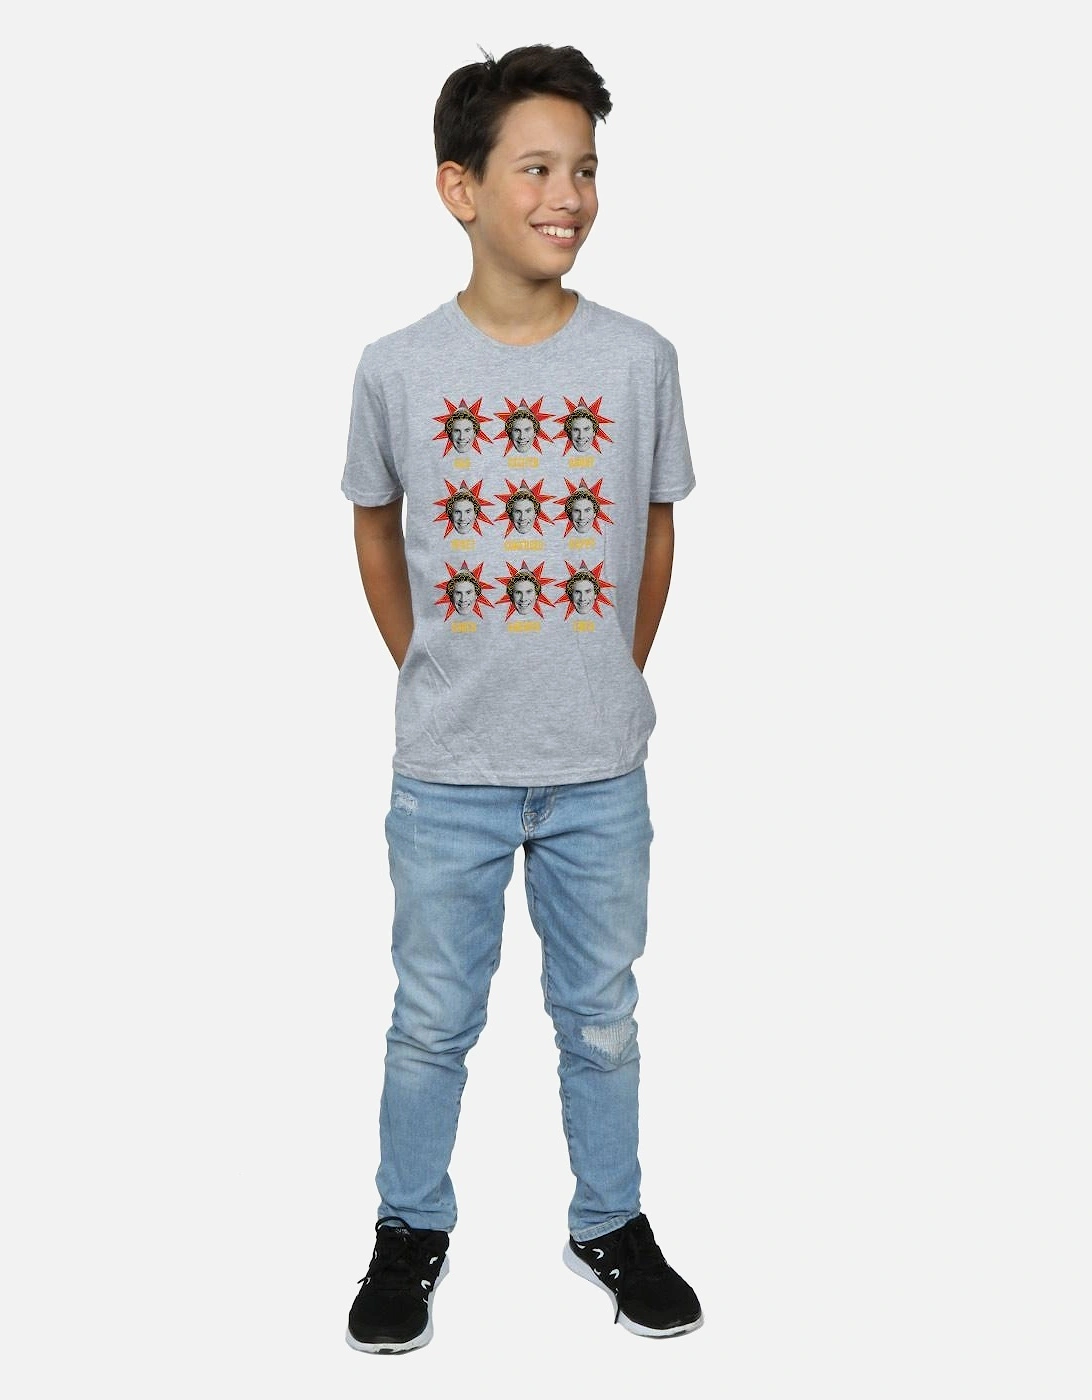 Boys Buddy Moods T-Shirt